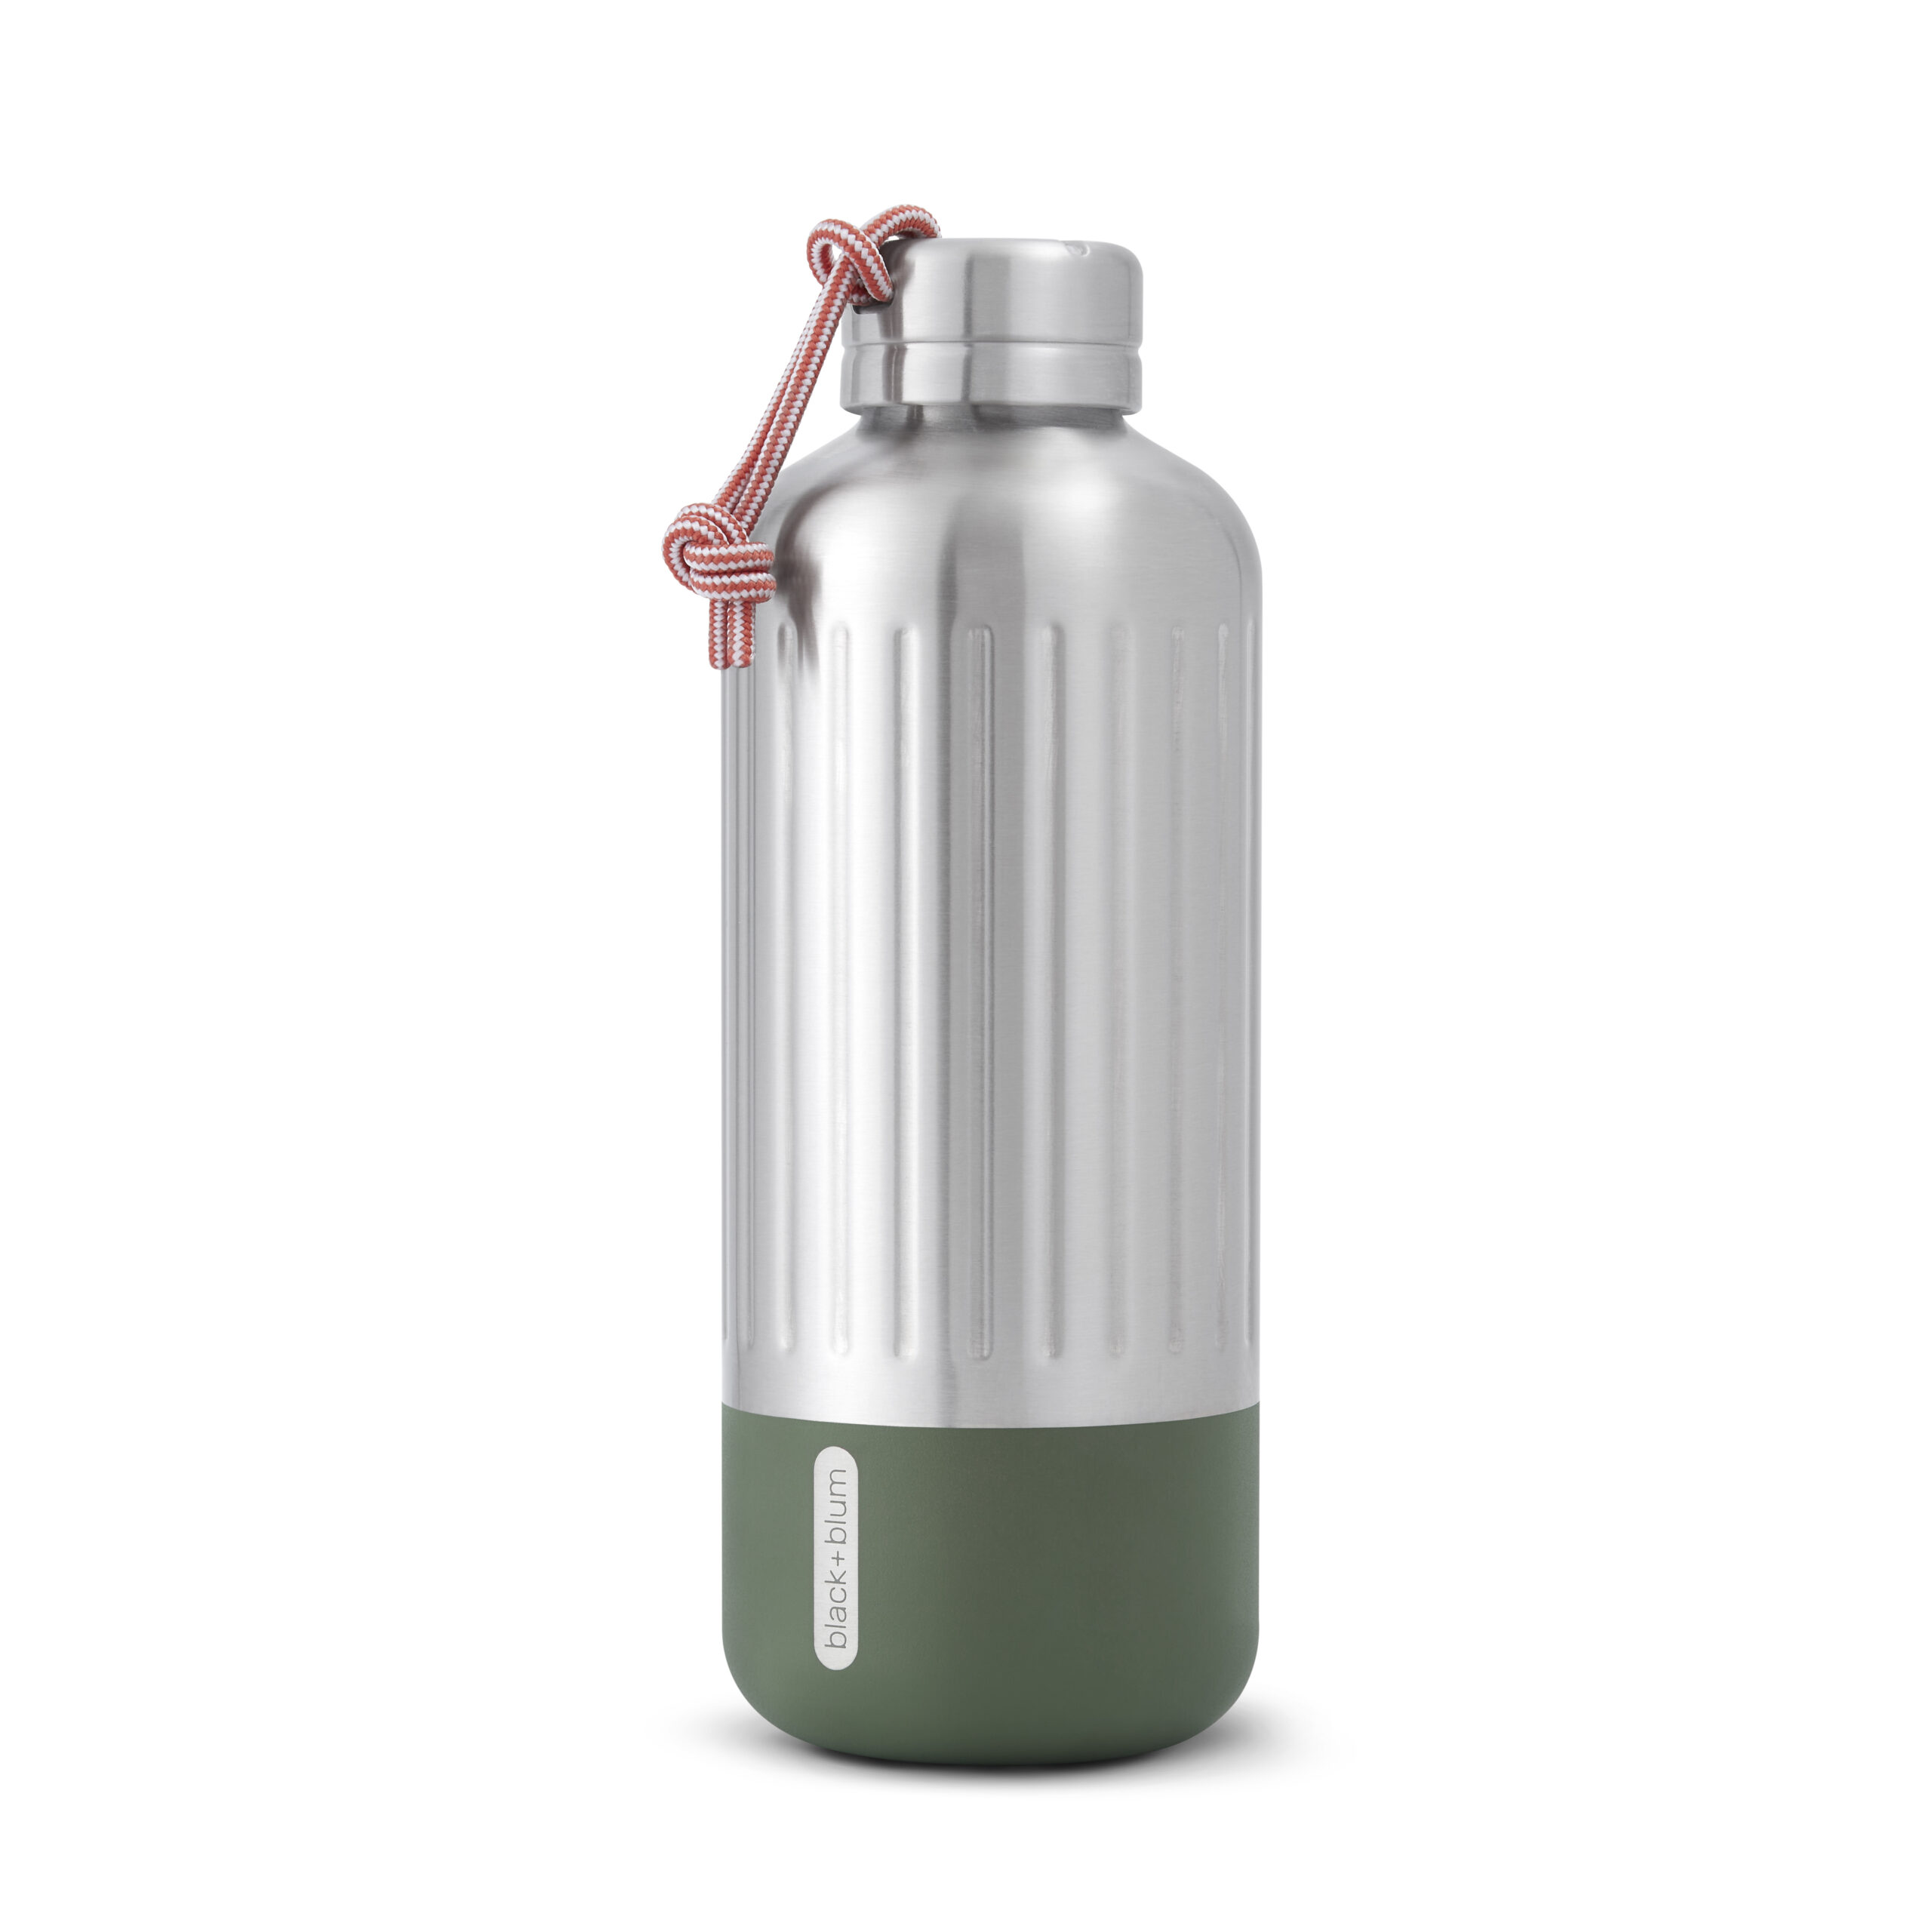 https://www.greenerlyfe.com/wp-content/uploads/2023/02/Black-and-Blum-Insulated-Explorer-Bottle-Large-Olive-scaled.jpg